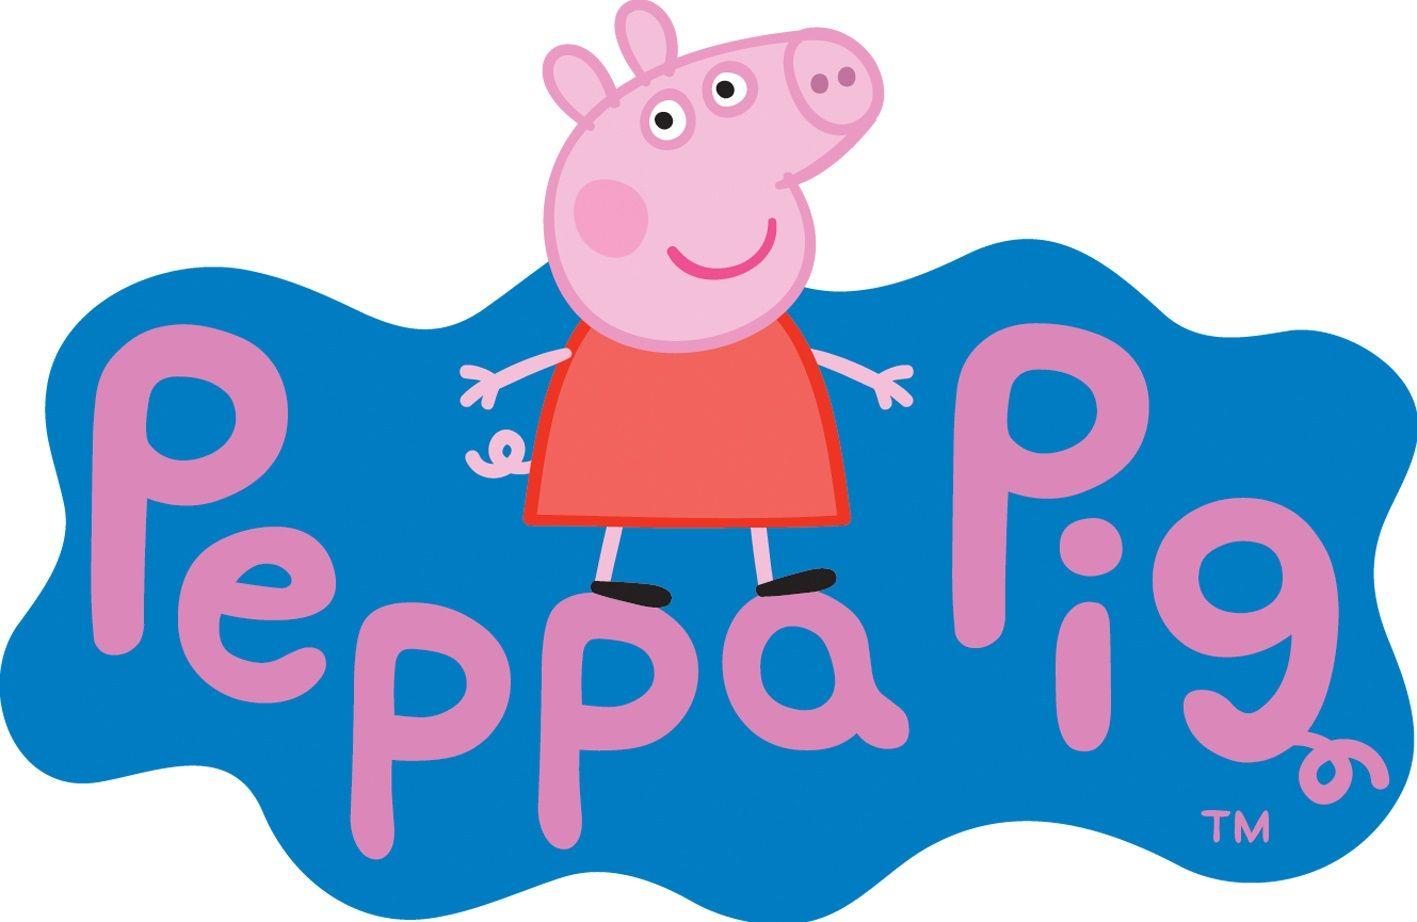 Peppa Pig wallpaper HD free download